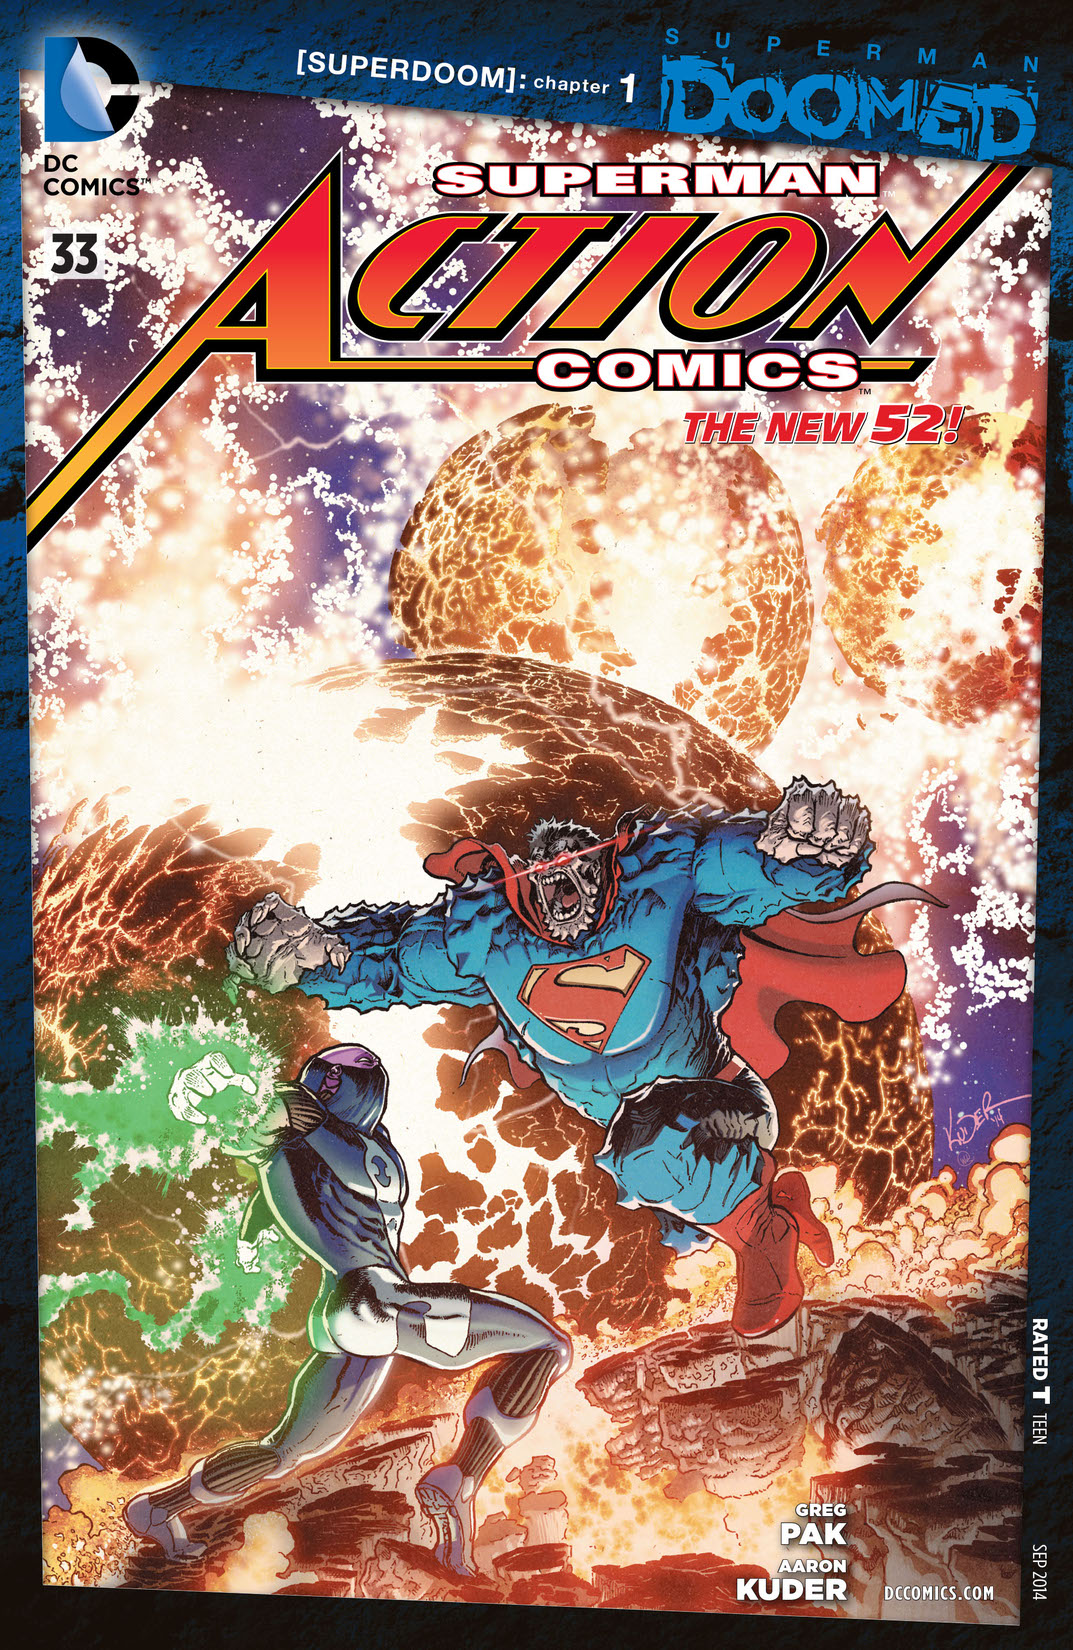 Action Comics (2011-) #33 preview images